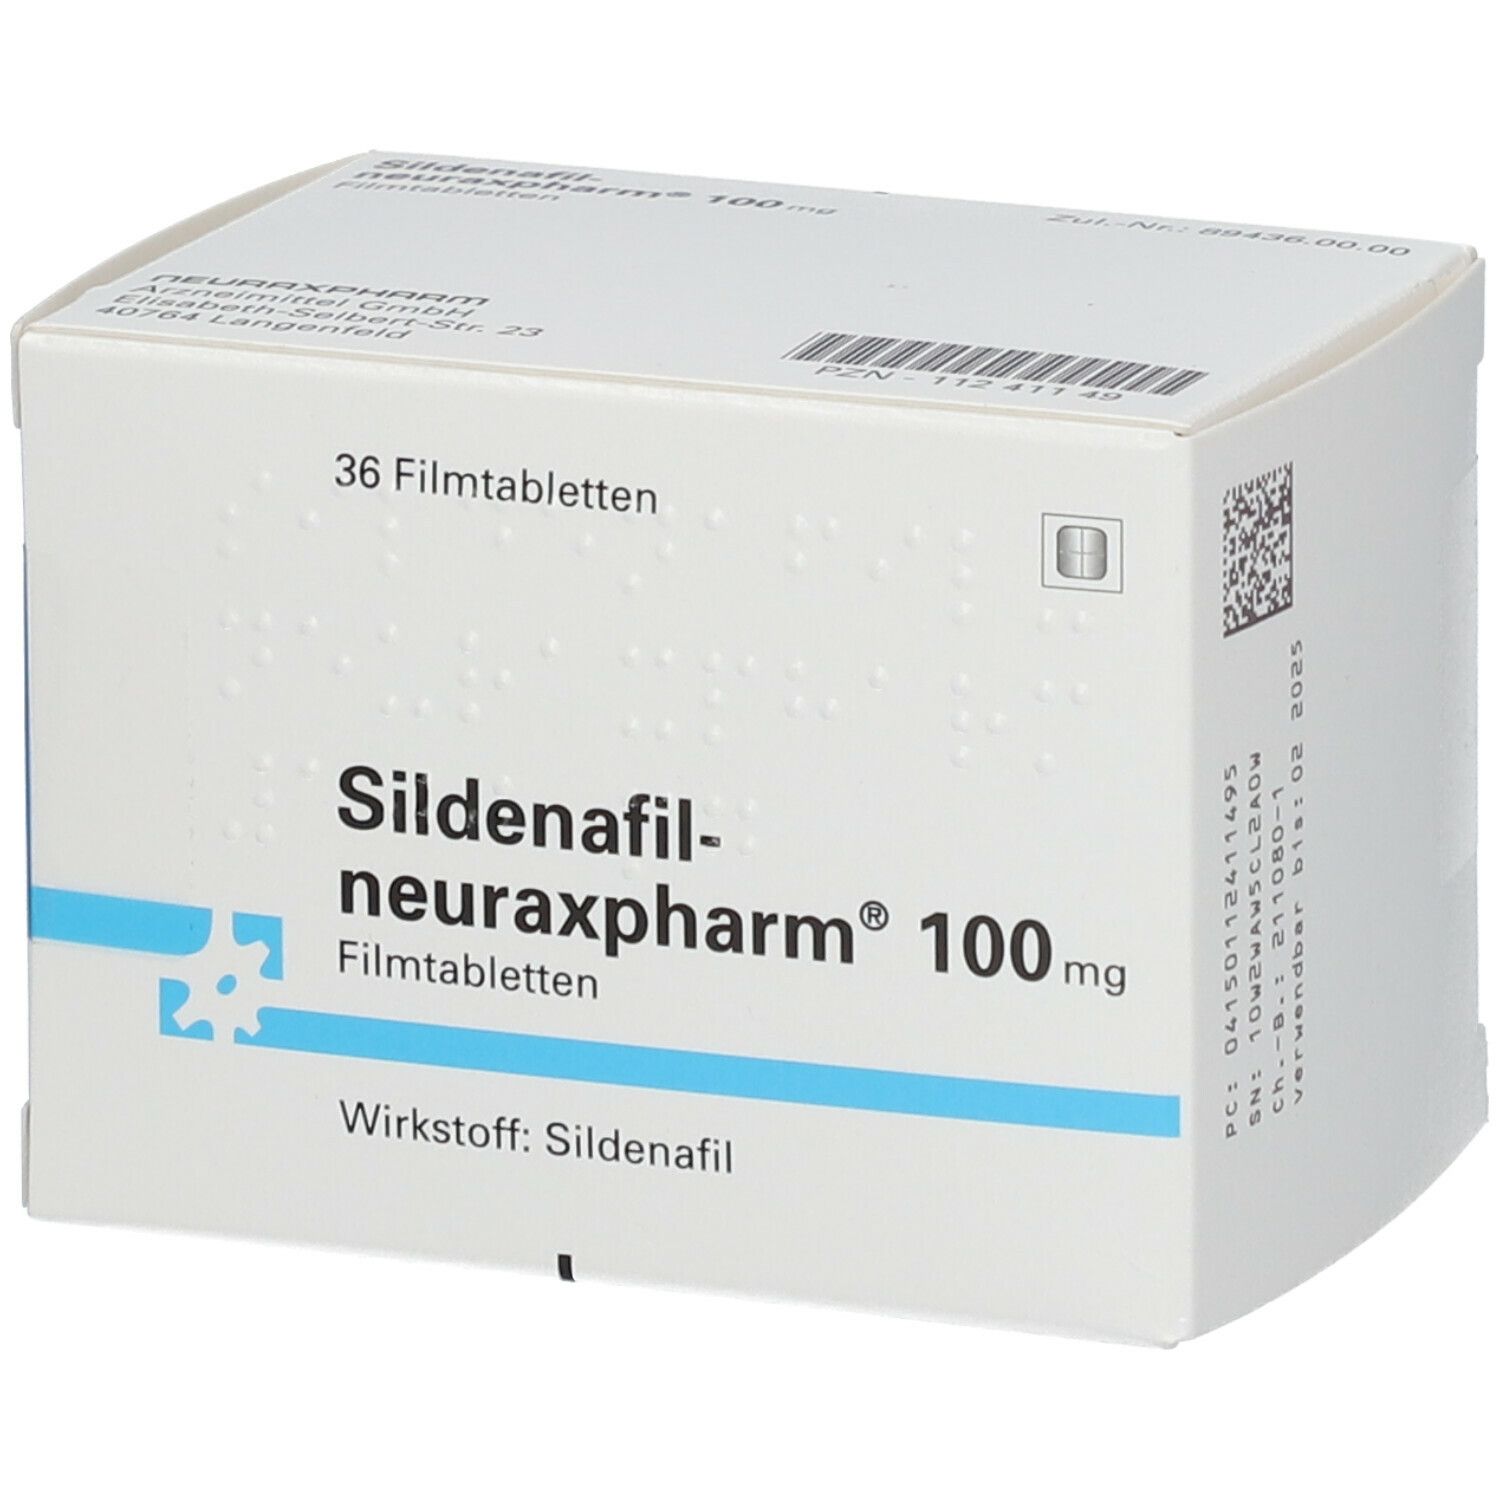 Sildenafil-neuraxpharm® 100 mg